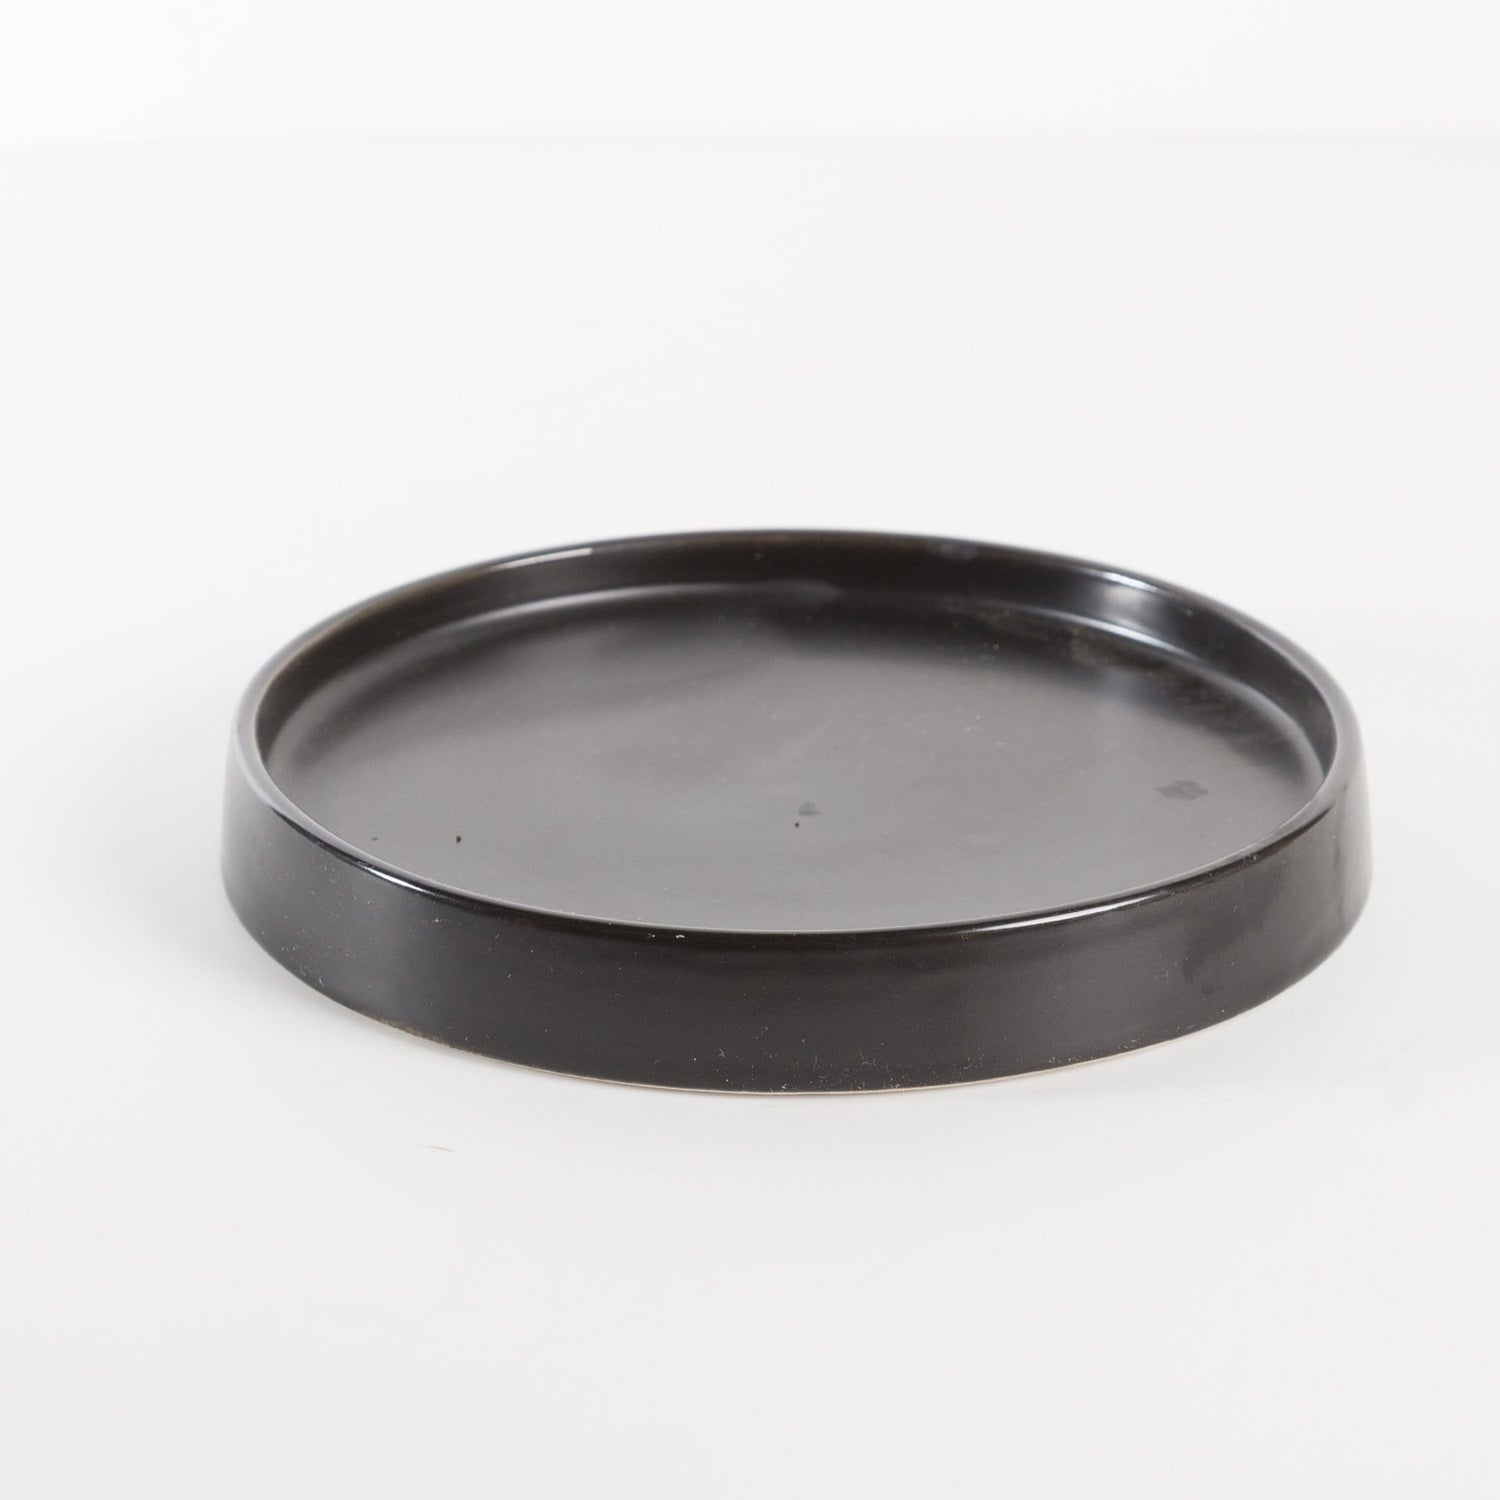 Washington Pottery Company Saucer 6" / Matte Black Essential Saucer